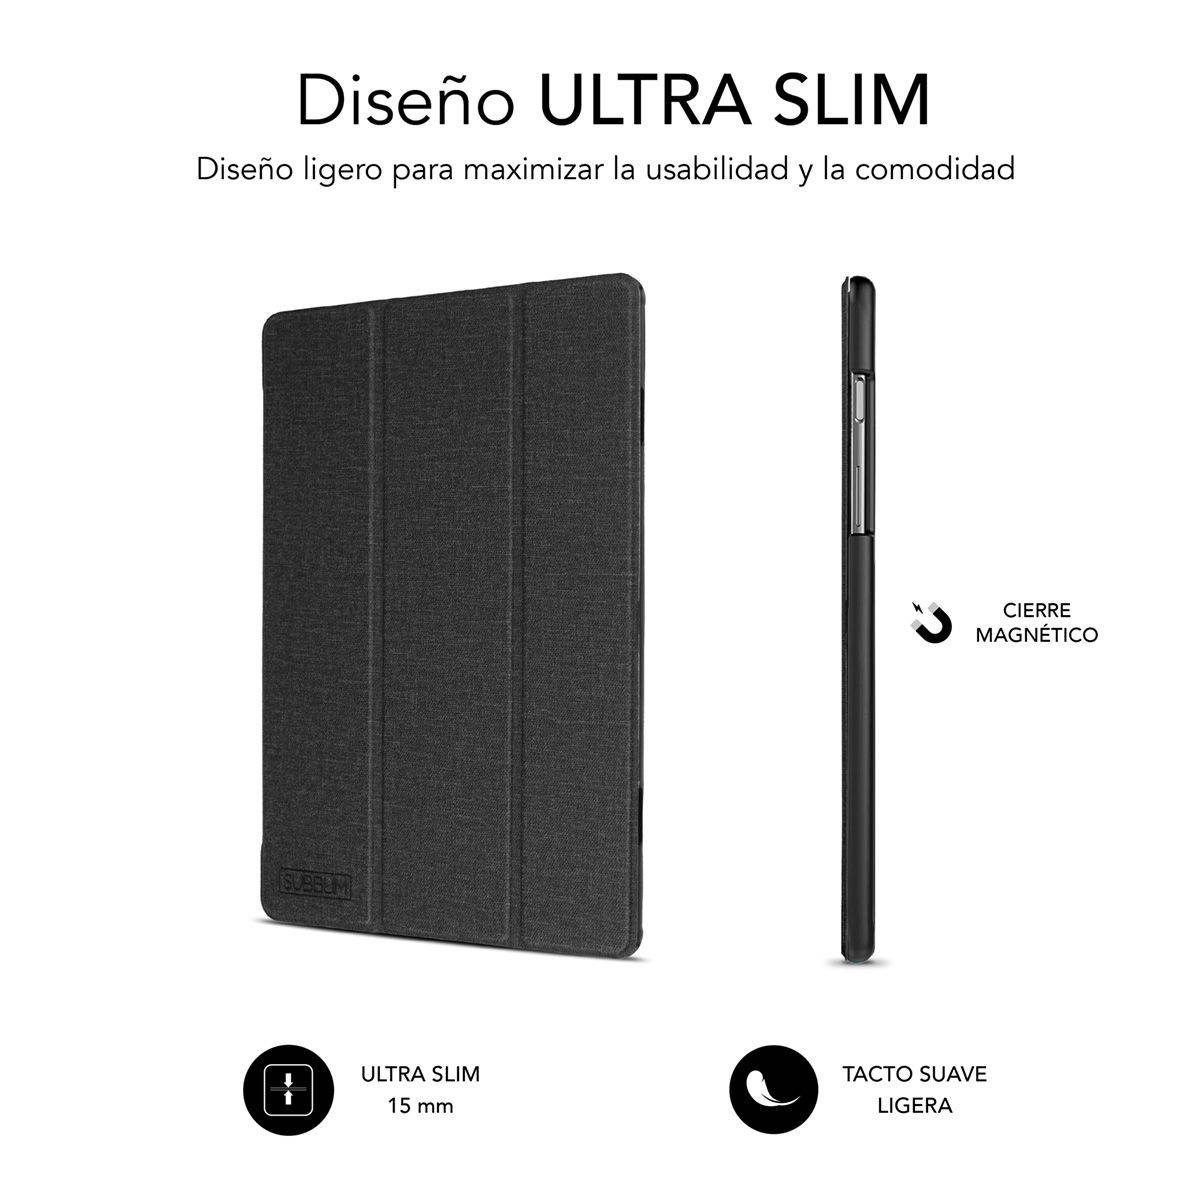 Funda Tablet Shock Case Samsung Tab A7 T500/505 10,4″ Black